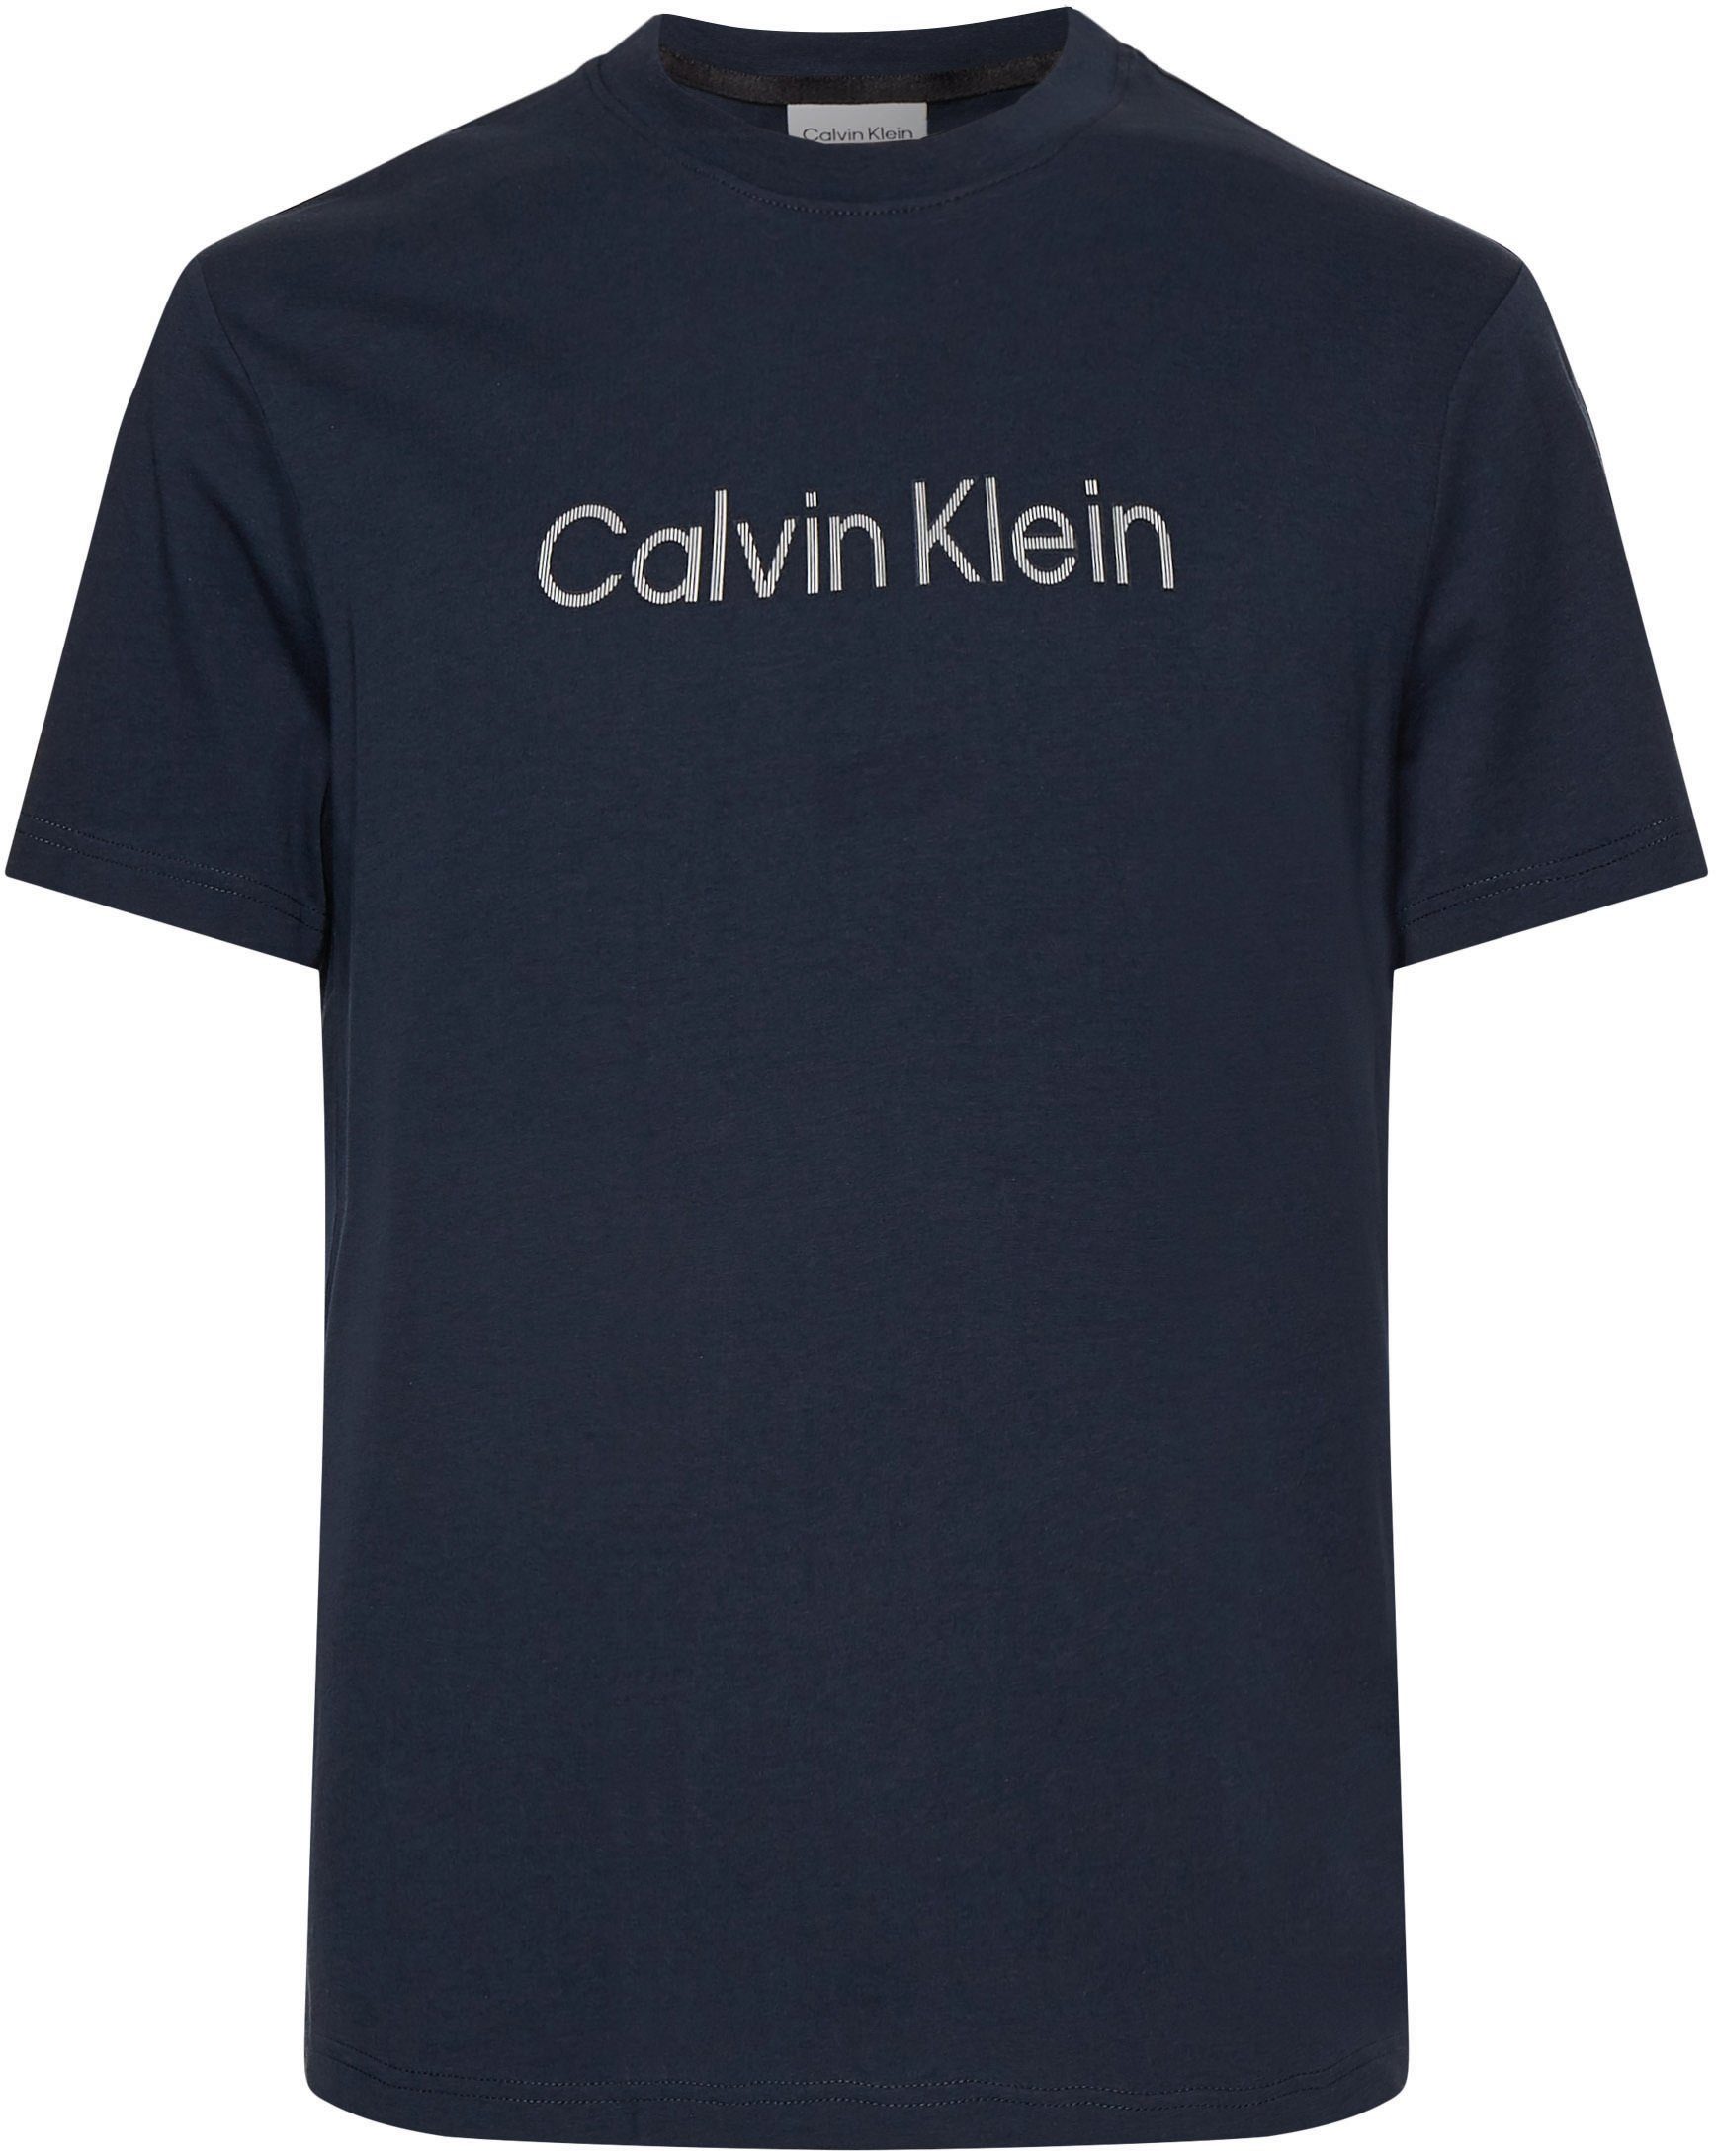 LOGO Calvin Klein T-Shirt navy STRIPED calvin RAISED